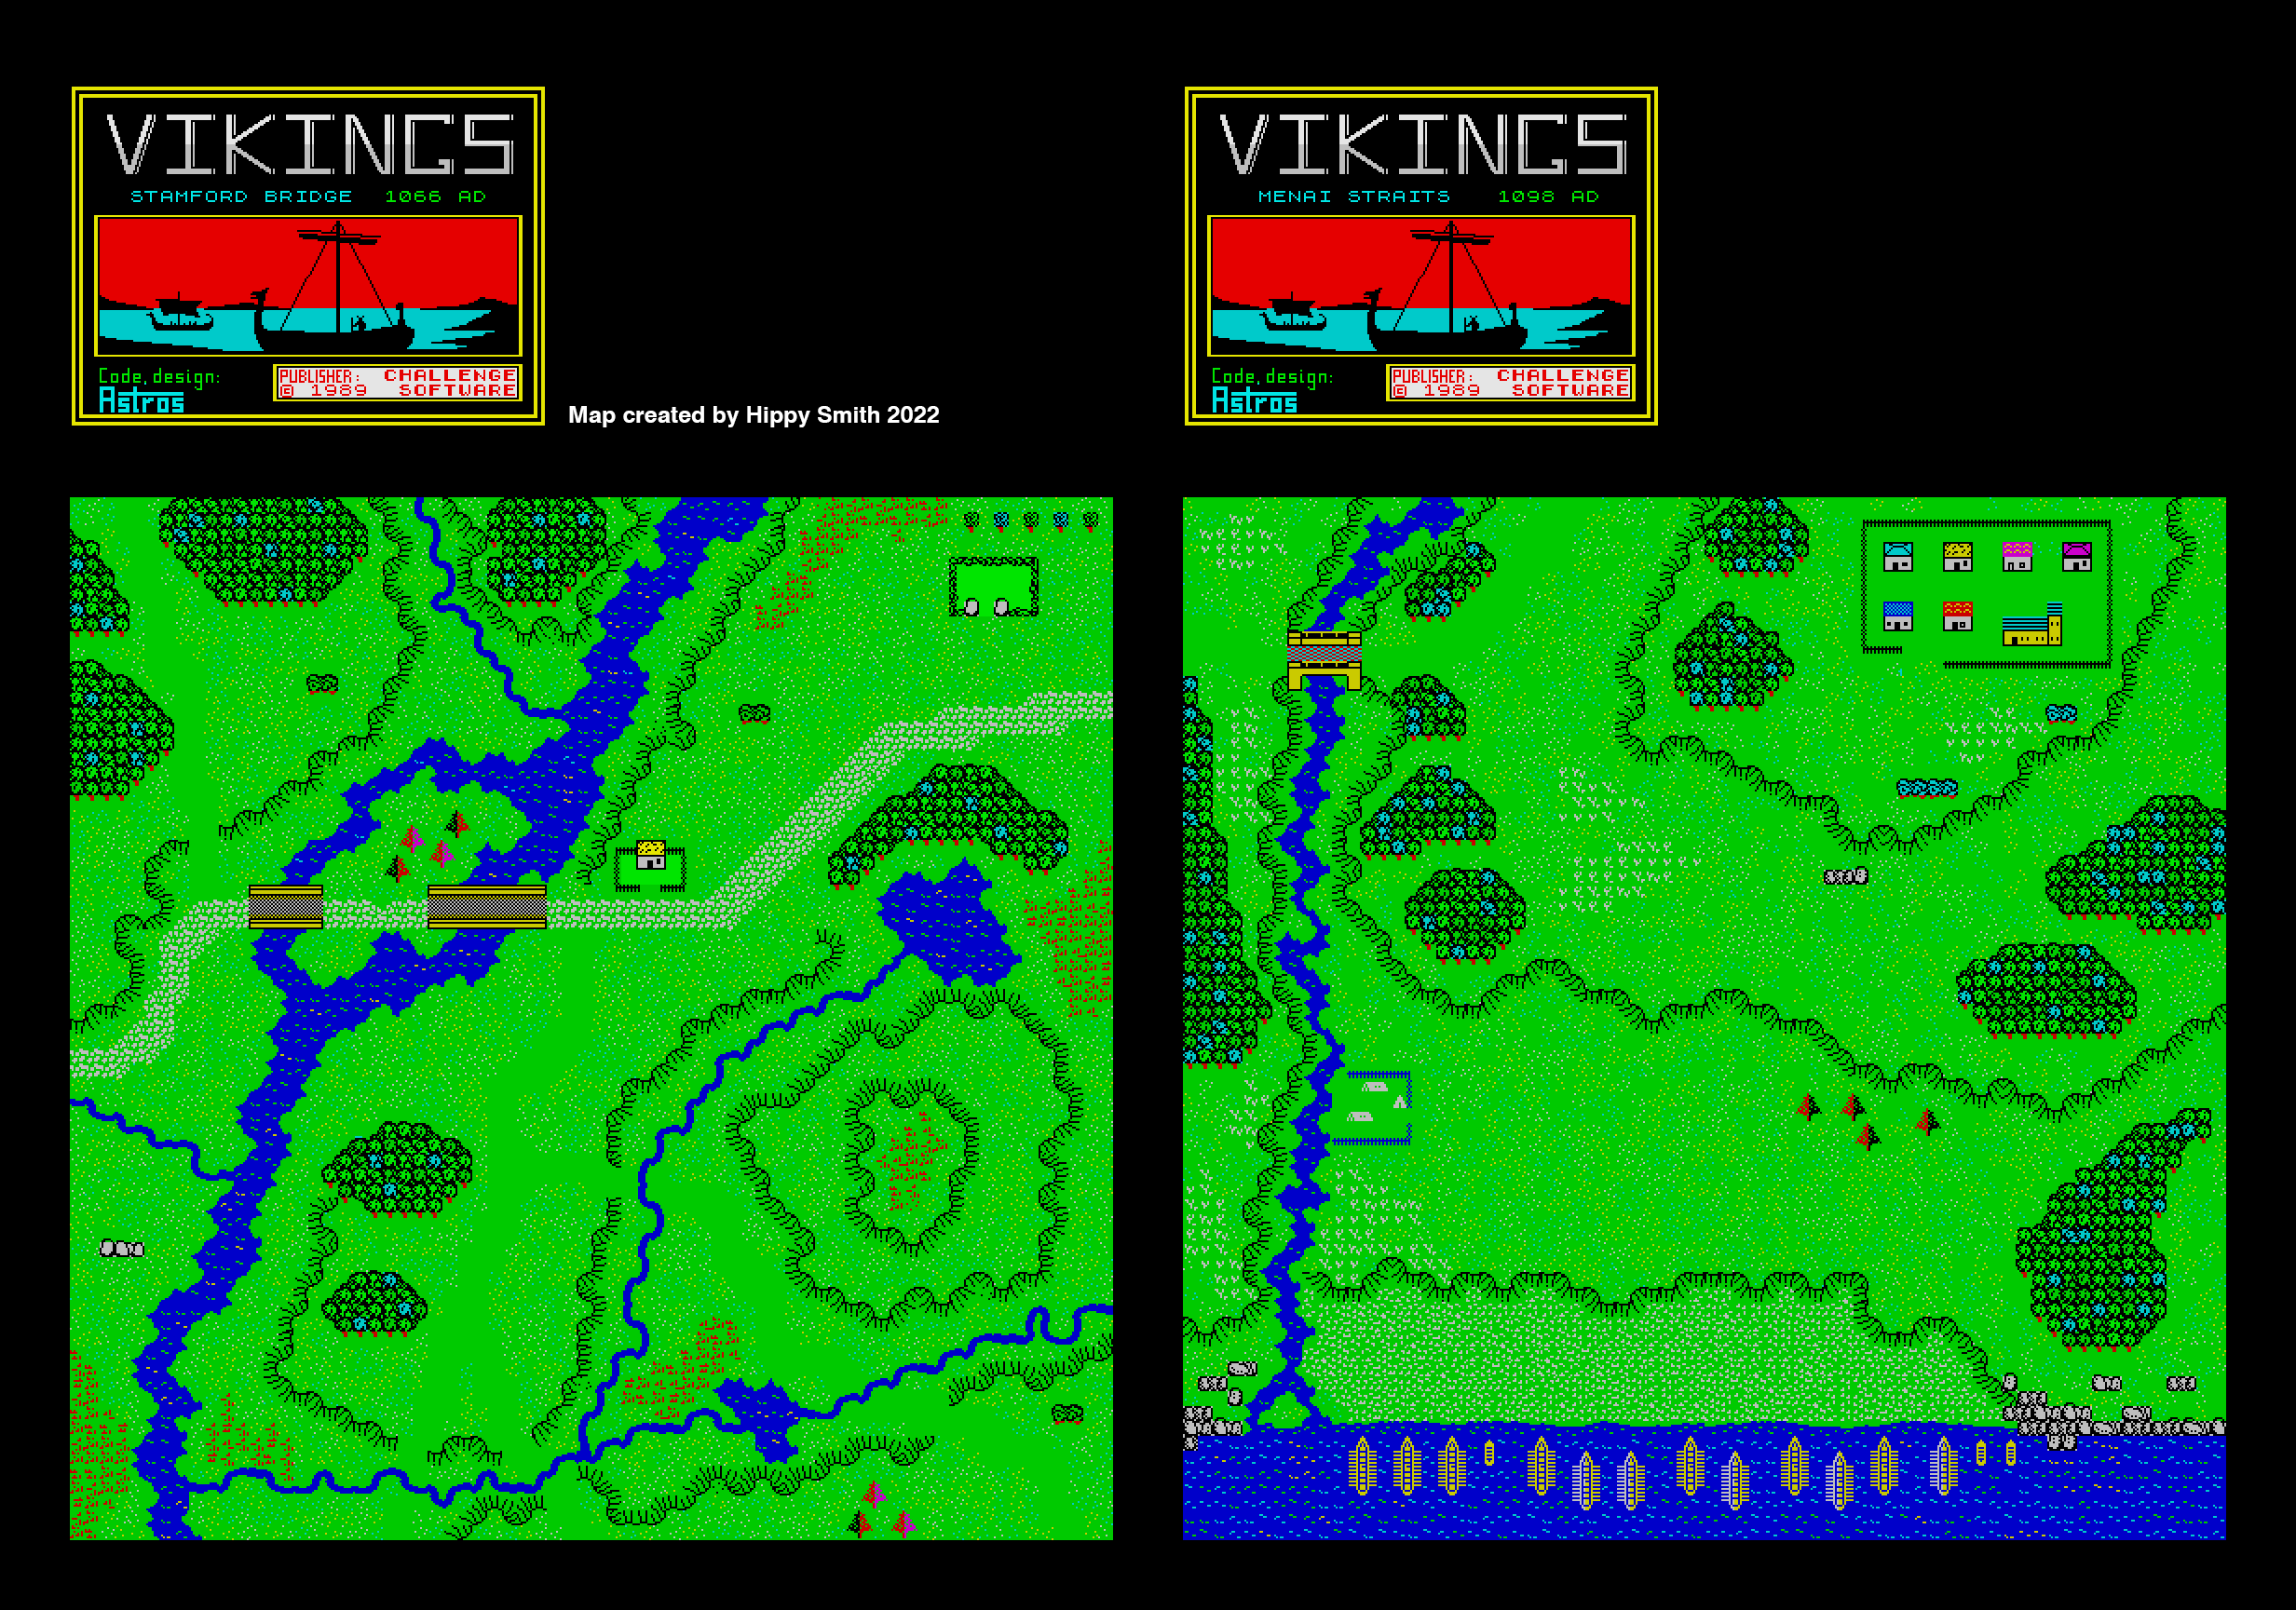 Vikings - The Map